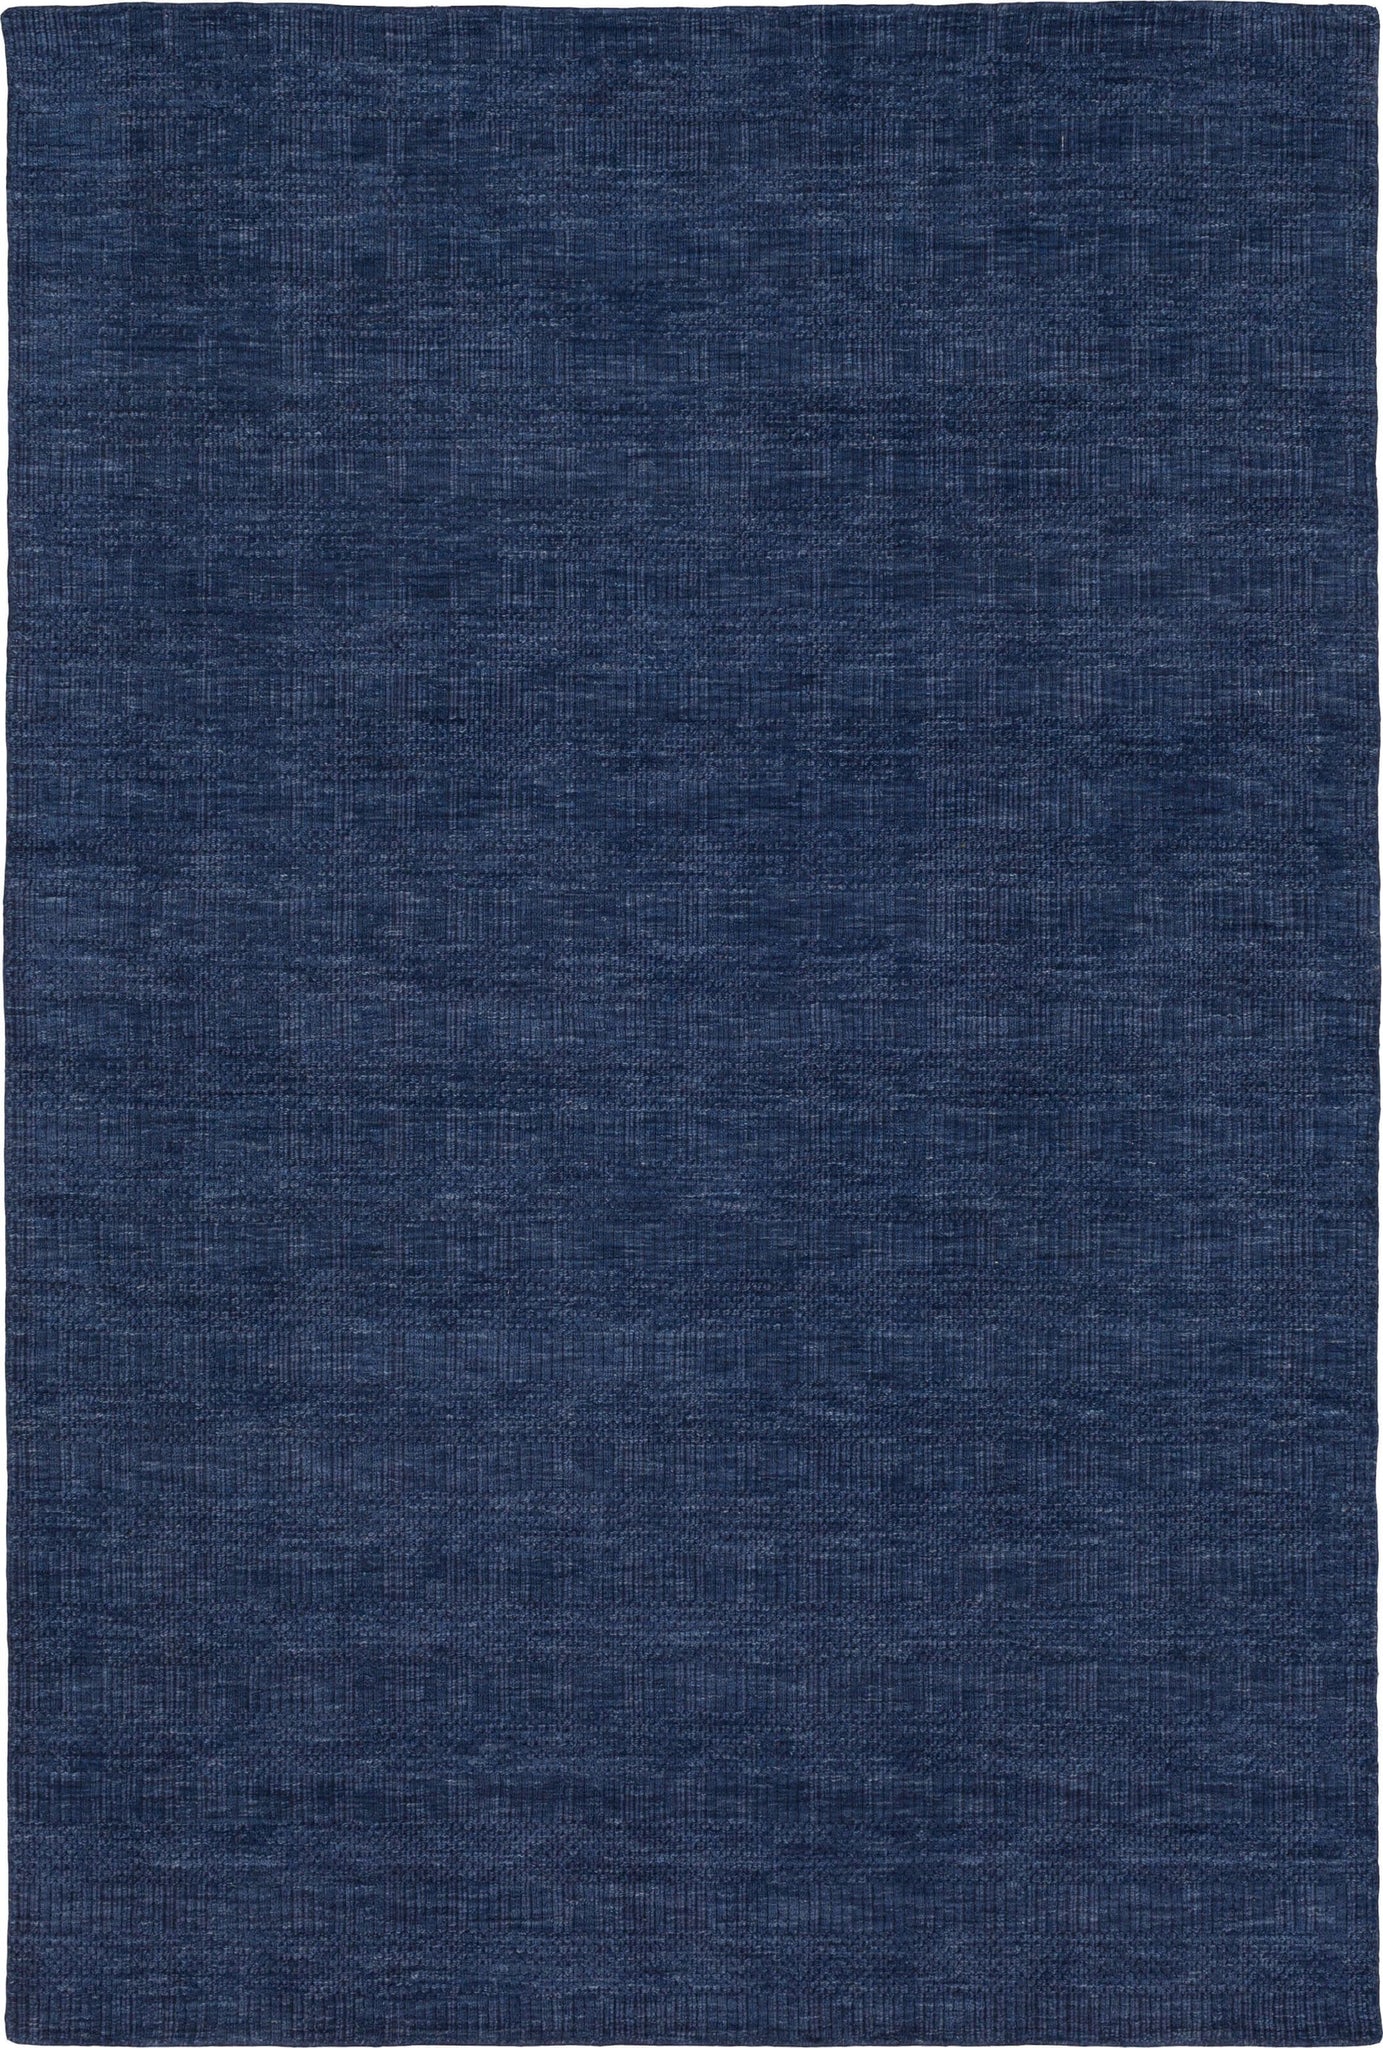 Karastan Gemini Navy Area Rug RG145 4590 Blue